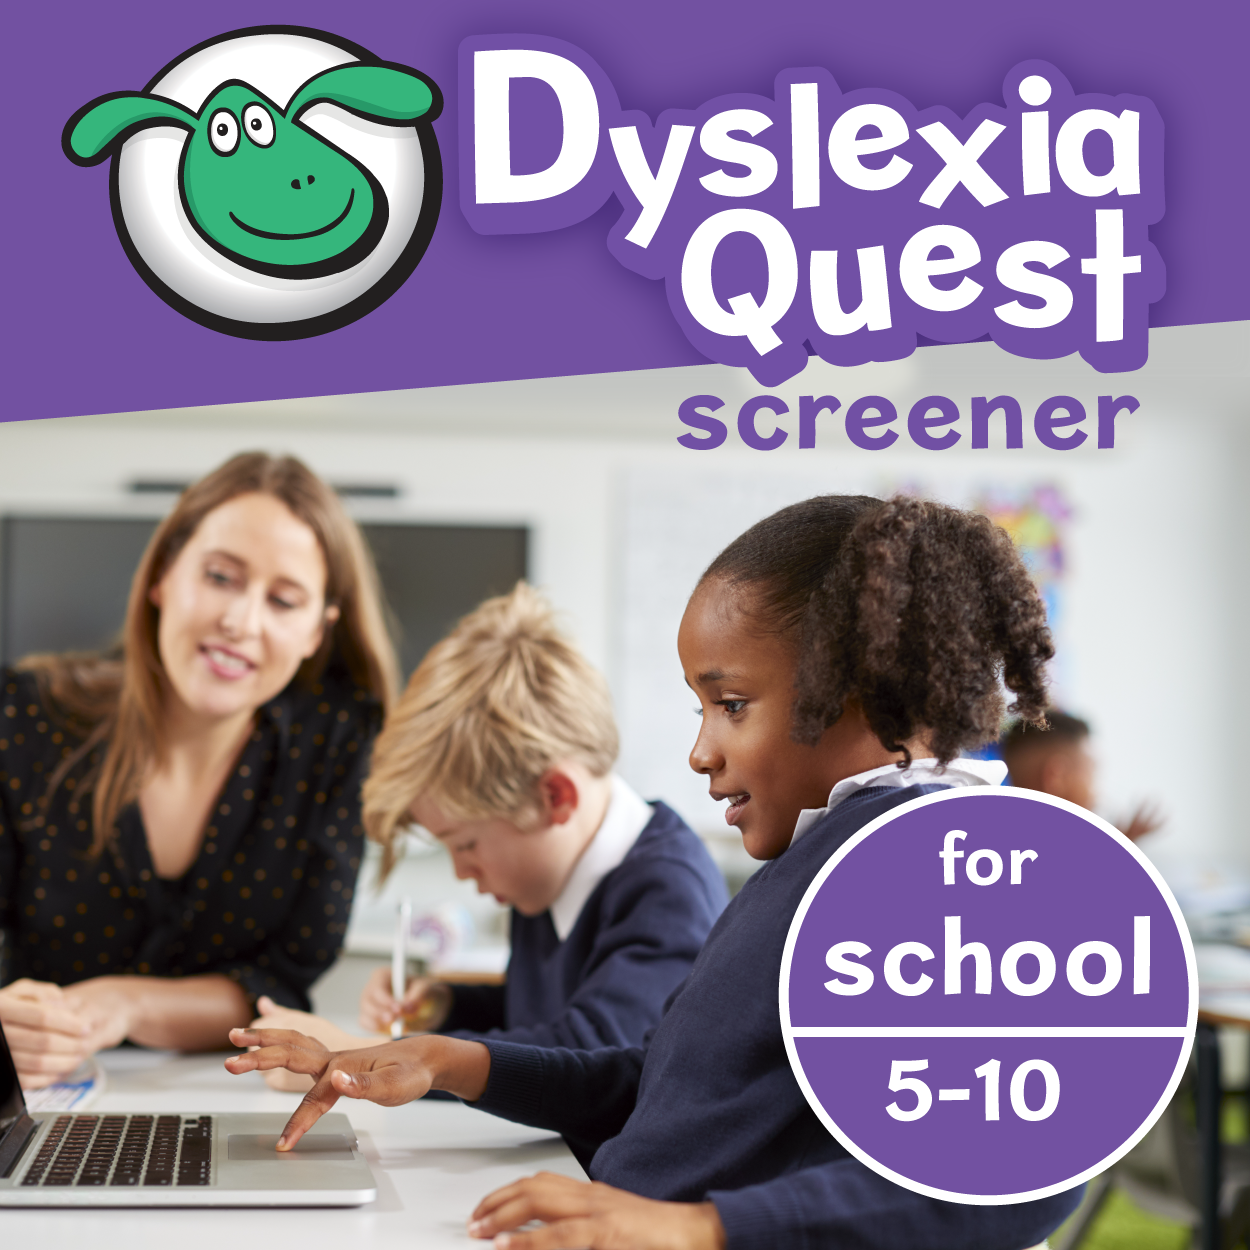 Dyslexia Quest screener for schools